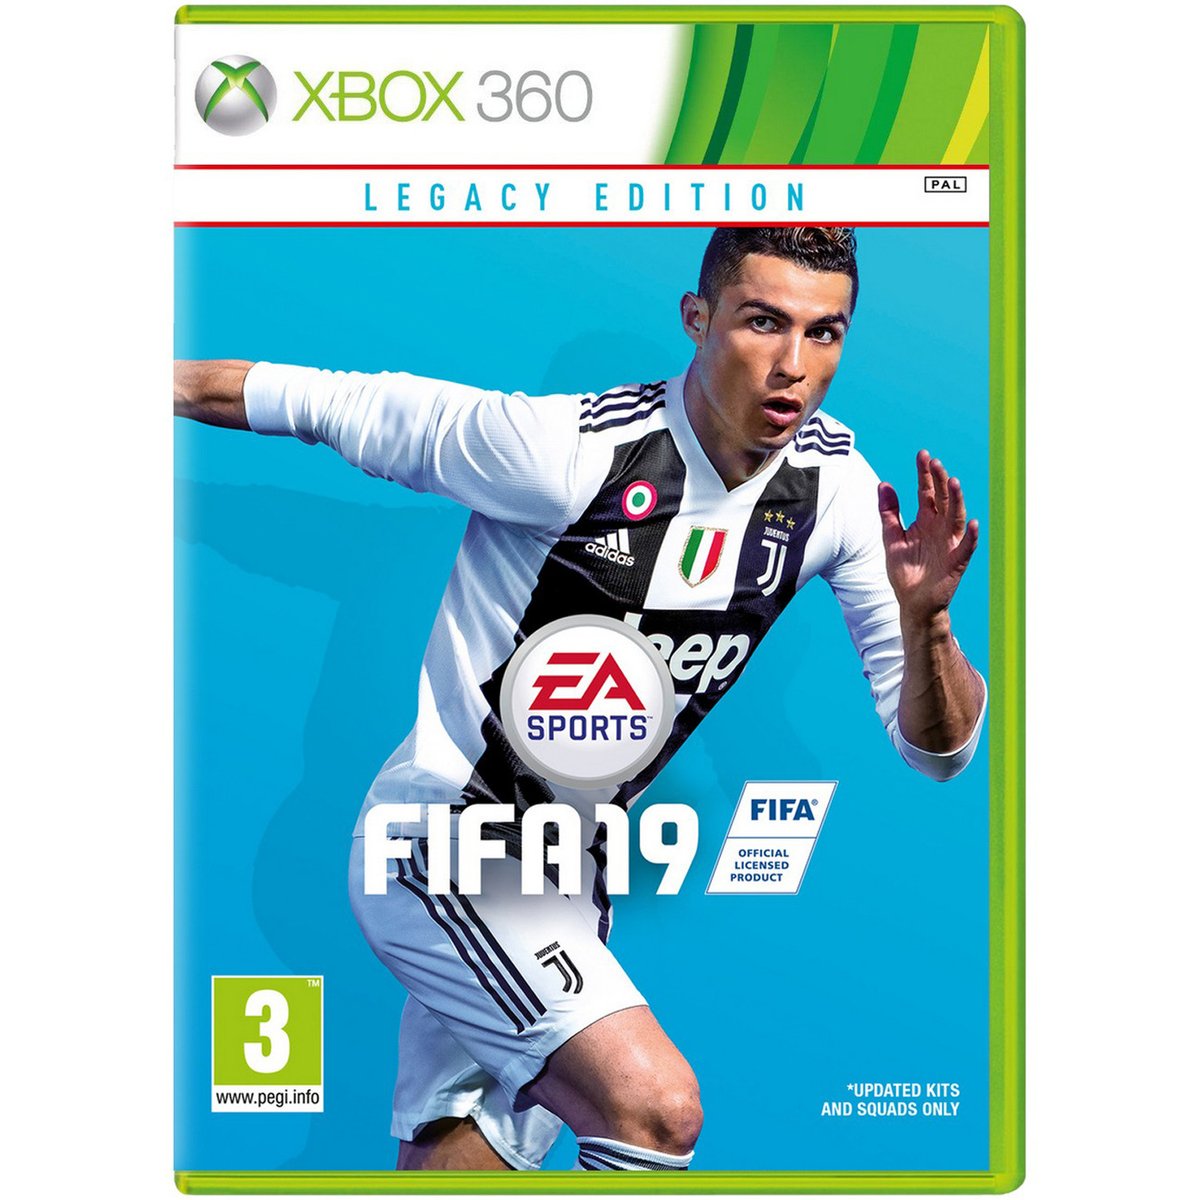 Xbox 360 FIFA 19: Legacy Edition